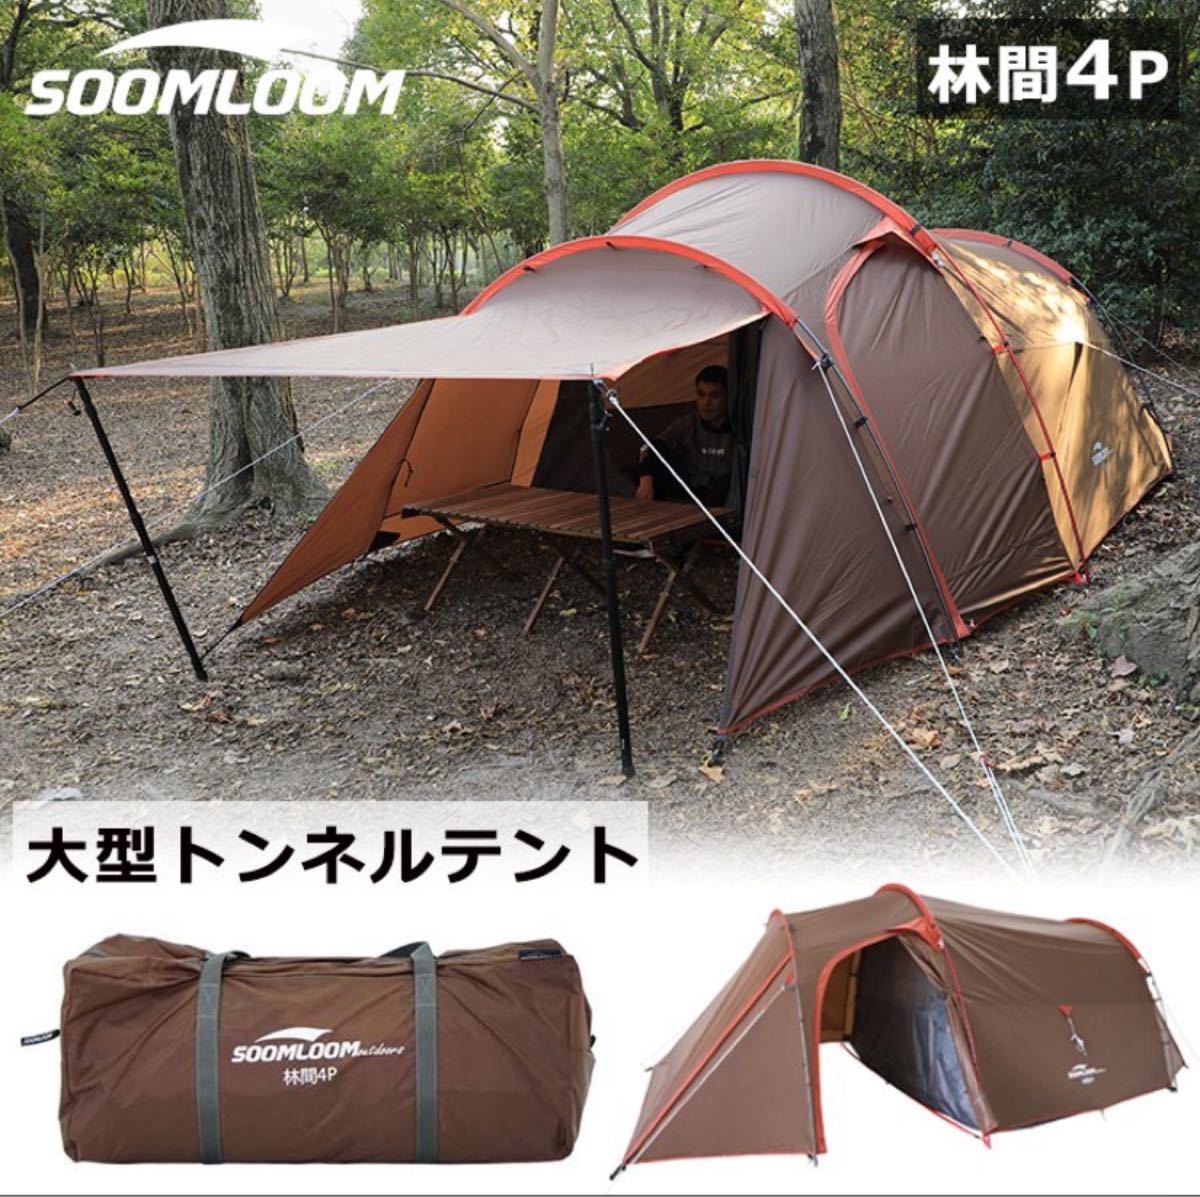 Soomloom 林間 4P大型 テント4人用 超軽量 テント キャンプ ドームテント シェルター